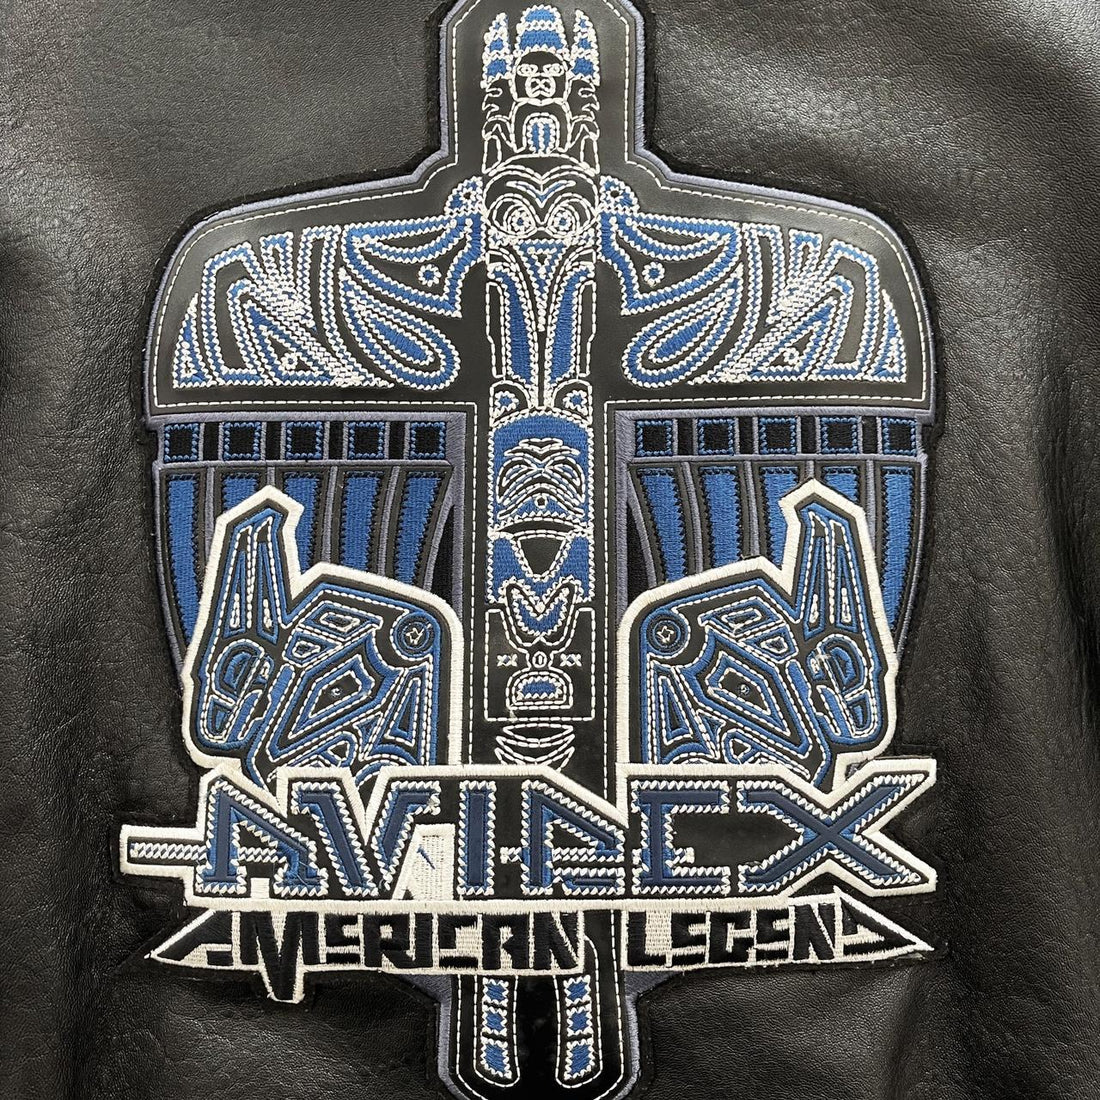 Avirex Leather Varsity And Letterman Jacket | Avirex Jackets